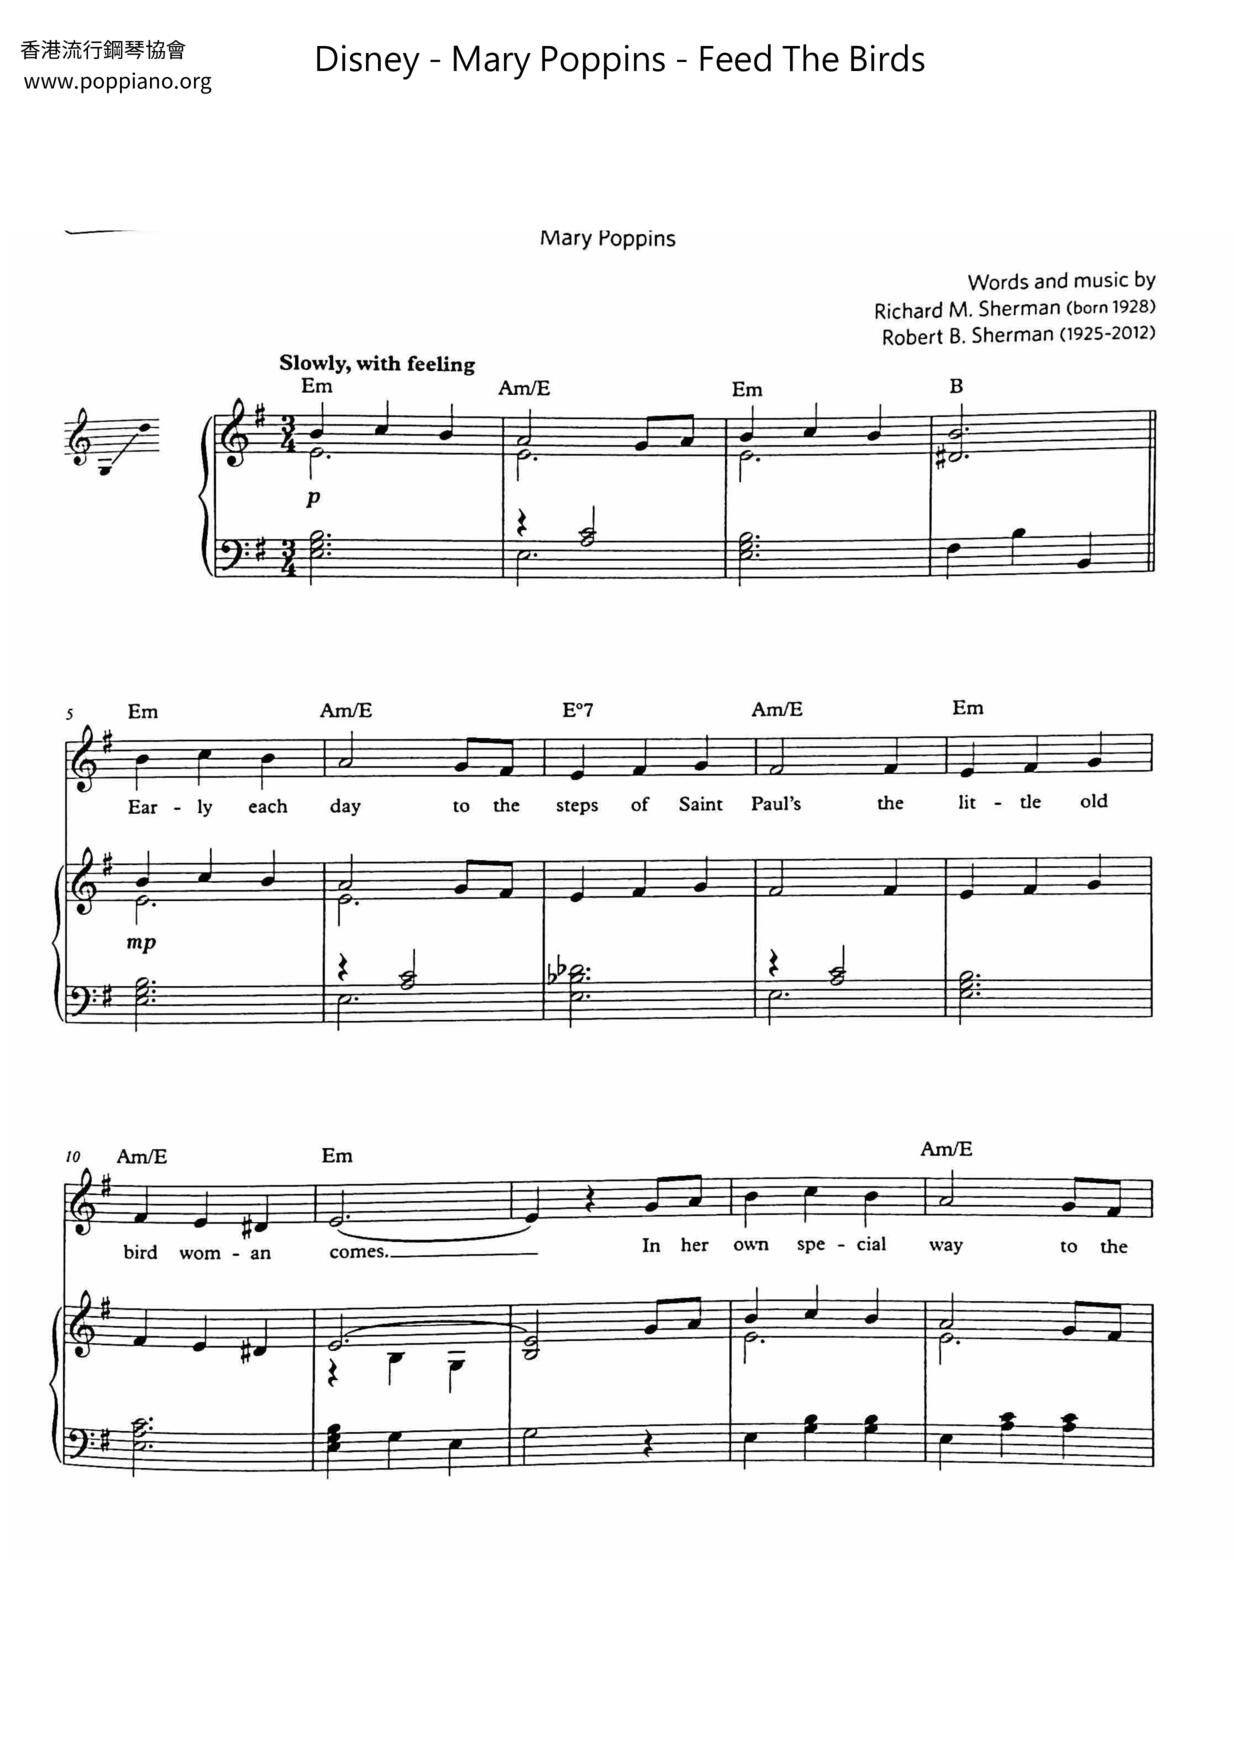 Mary Poppins - Feed The Birdsピアノ譜